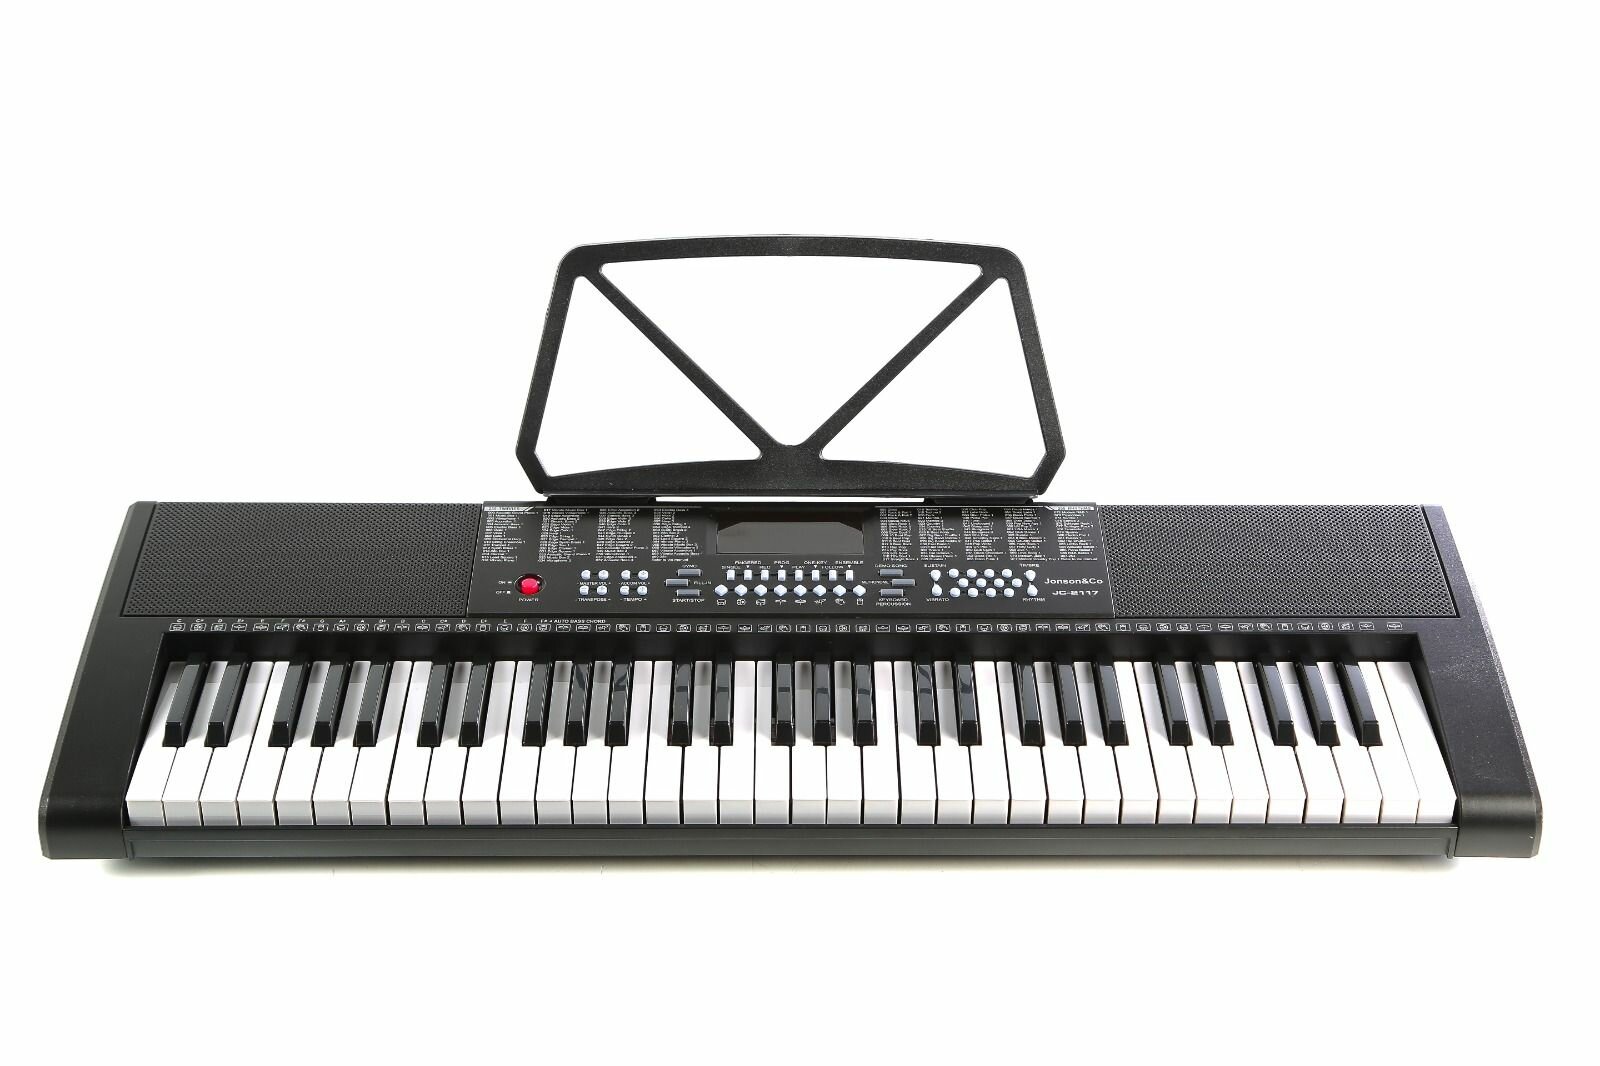 Синтезатор Jonson&Co JC-2702 61 клавиша с подсветкой 2117